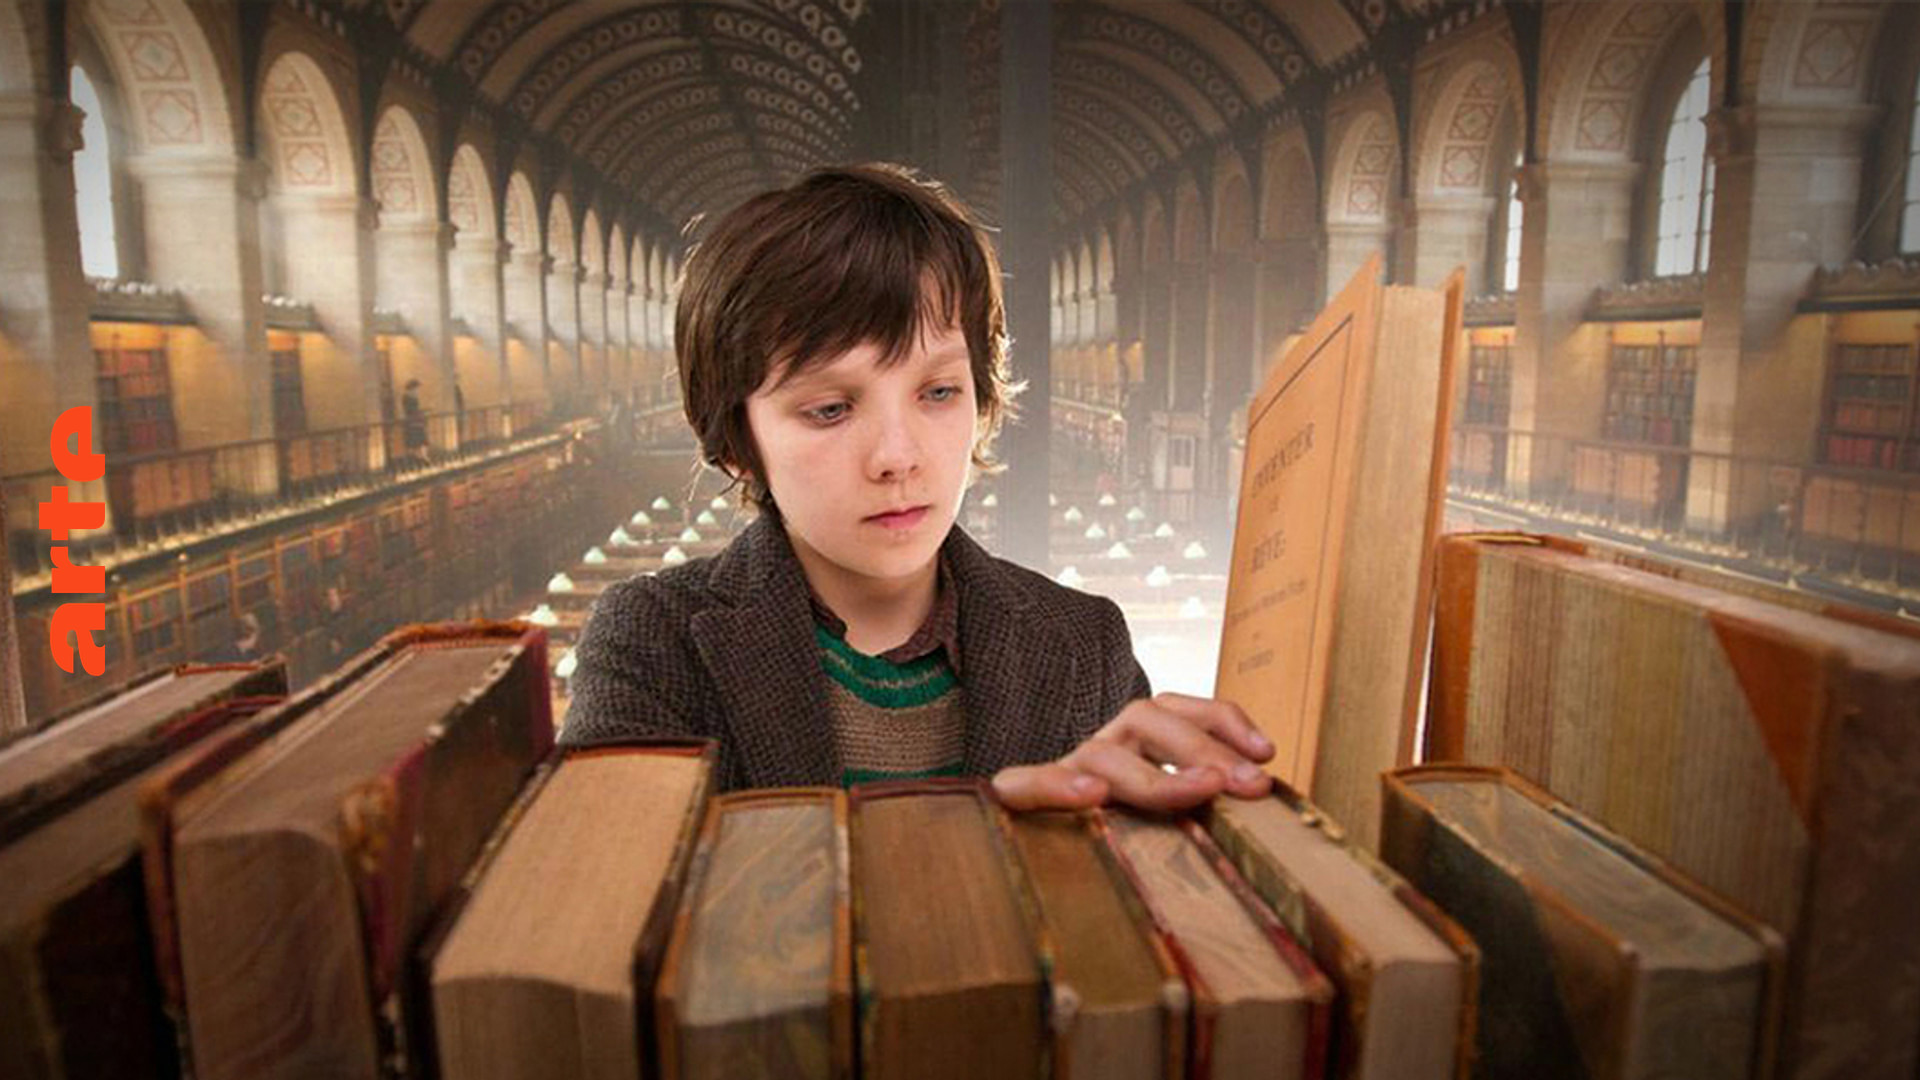 Blow up - Bibliotheken im Film